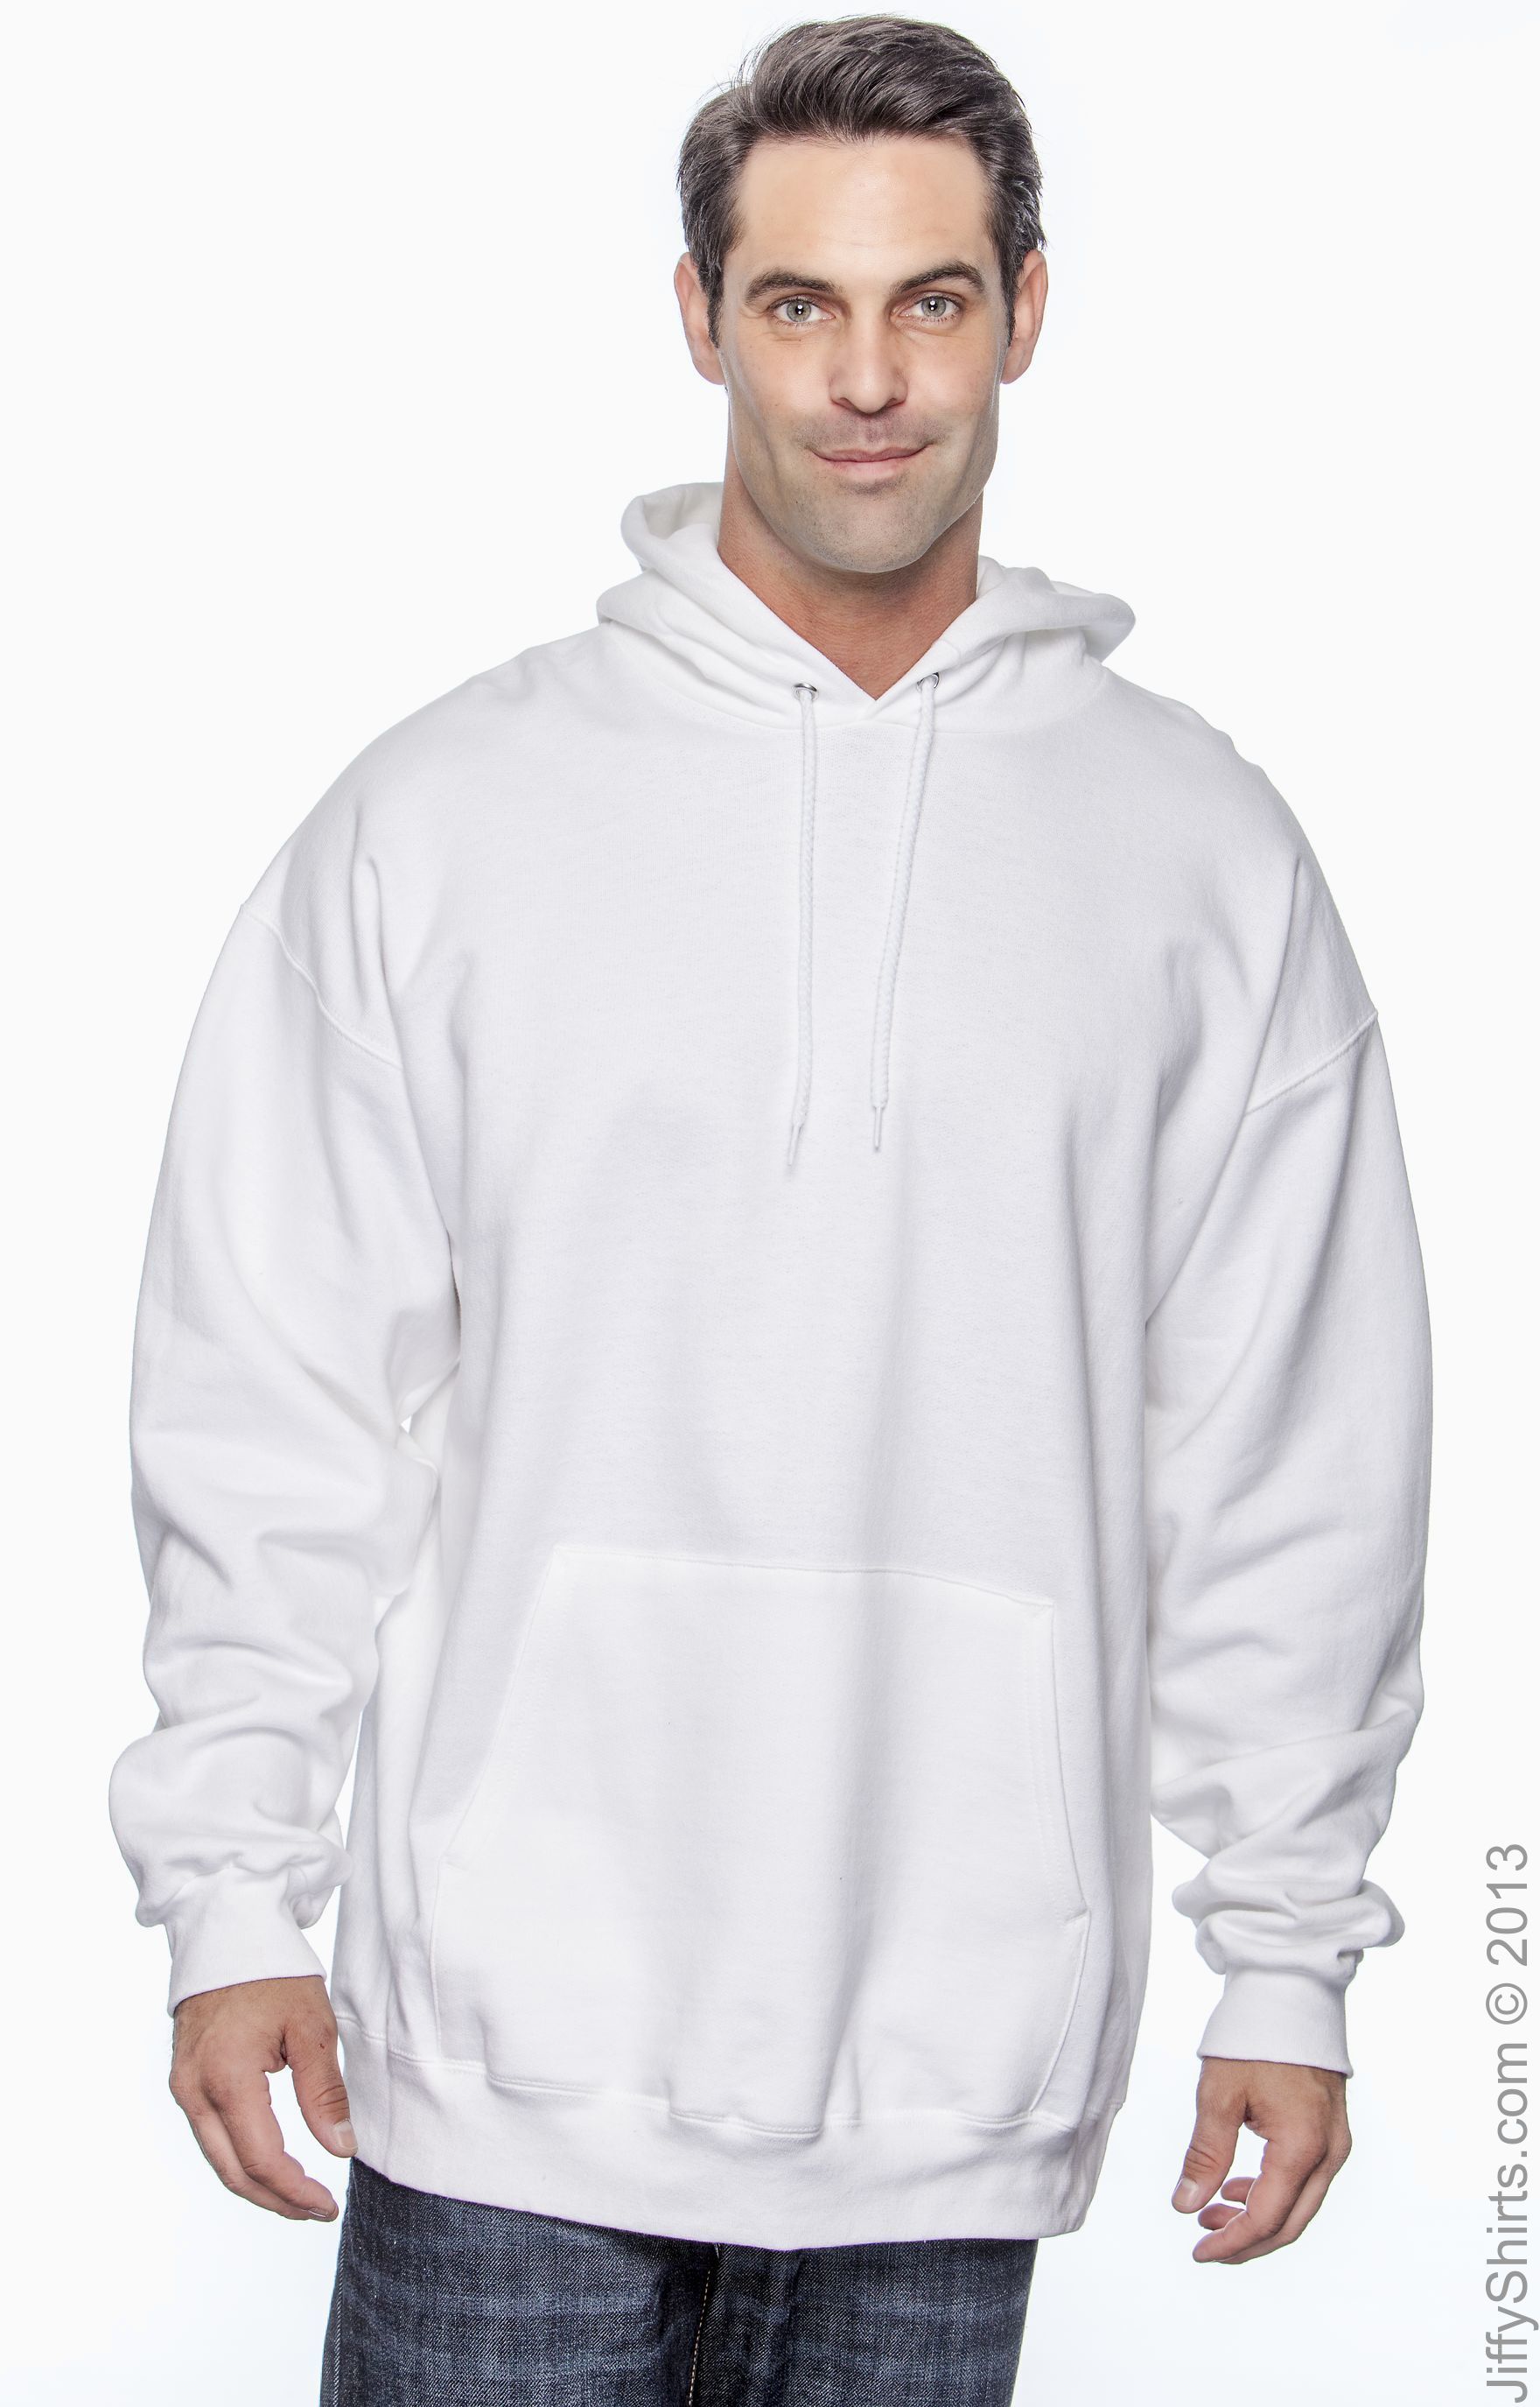 Hanes Tagless Organic Cotton Sweatshirt Jumper No Logo